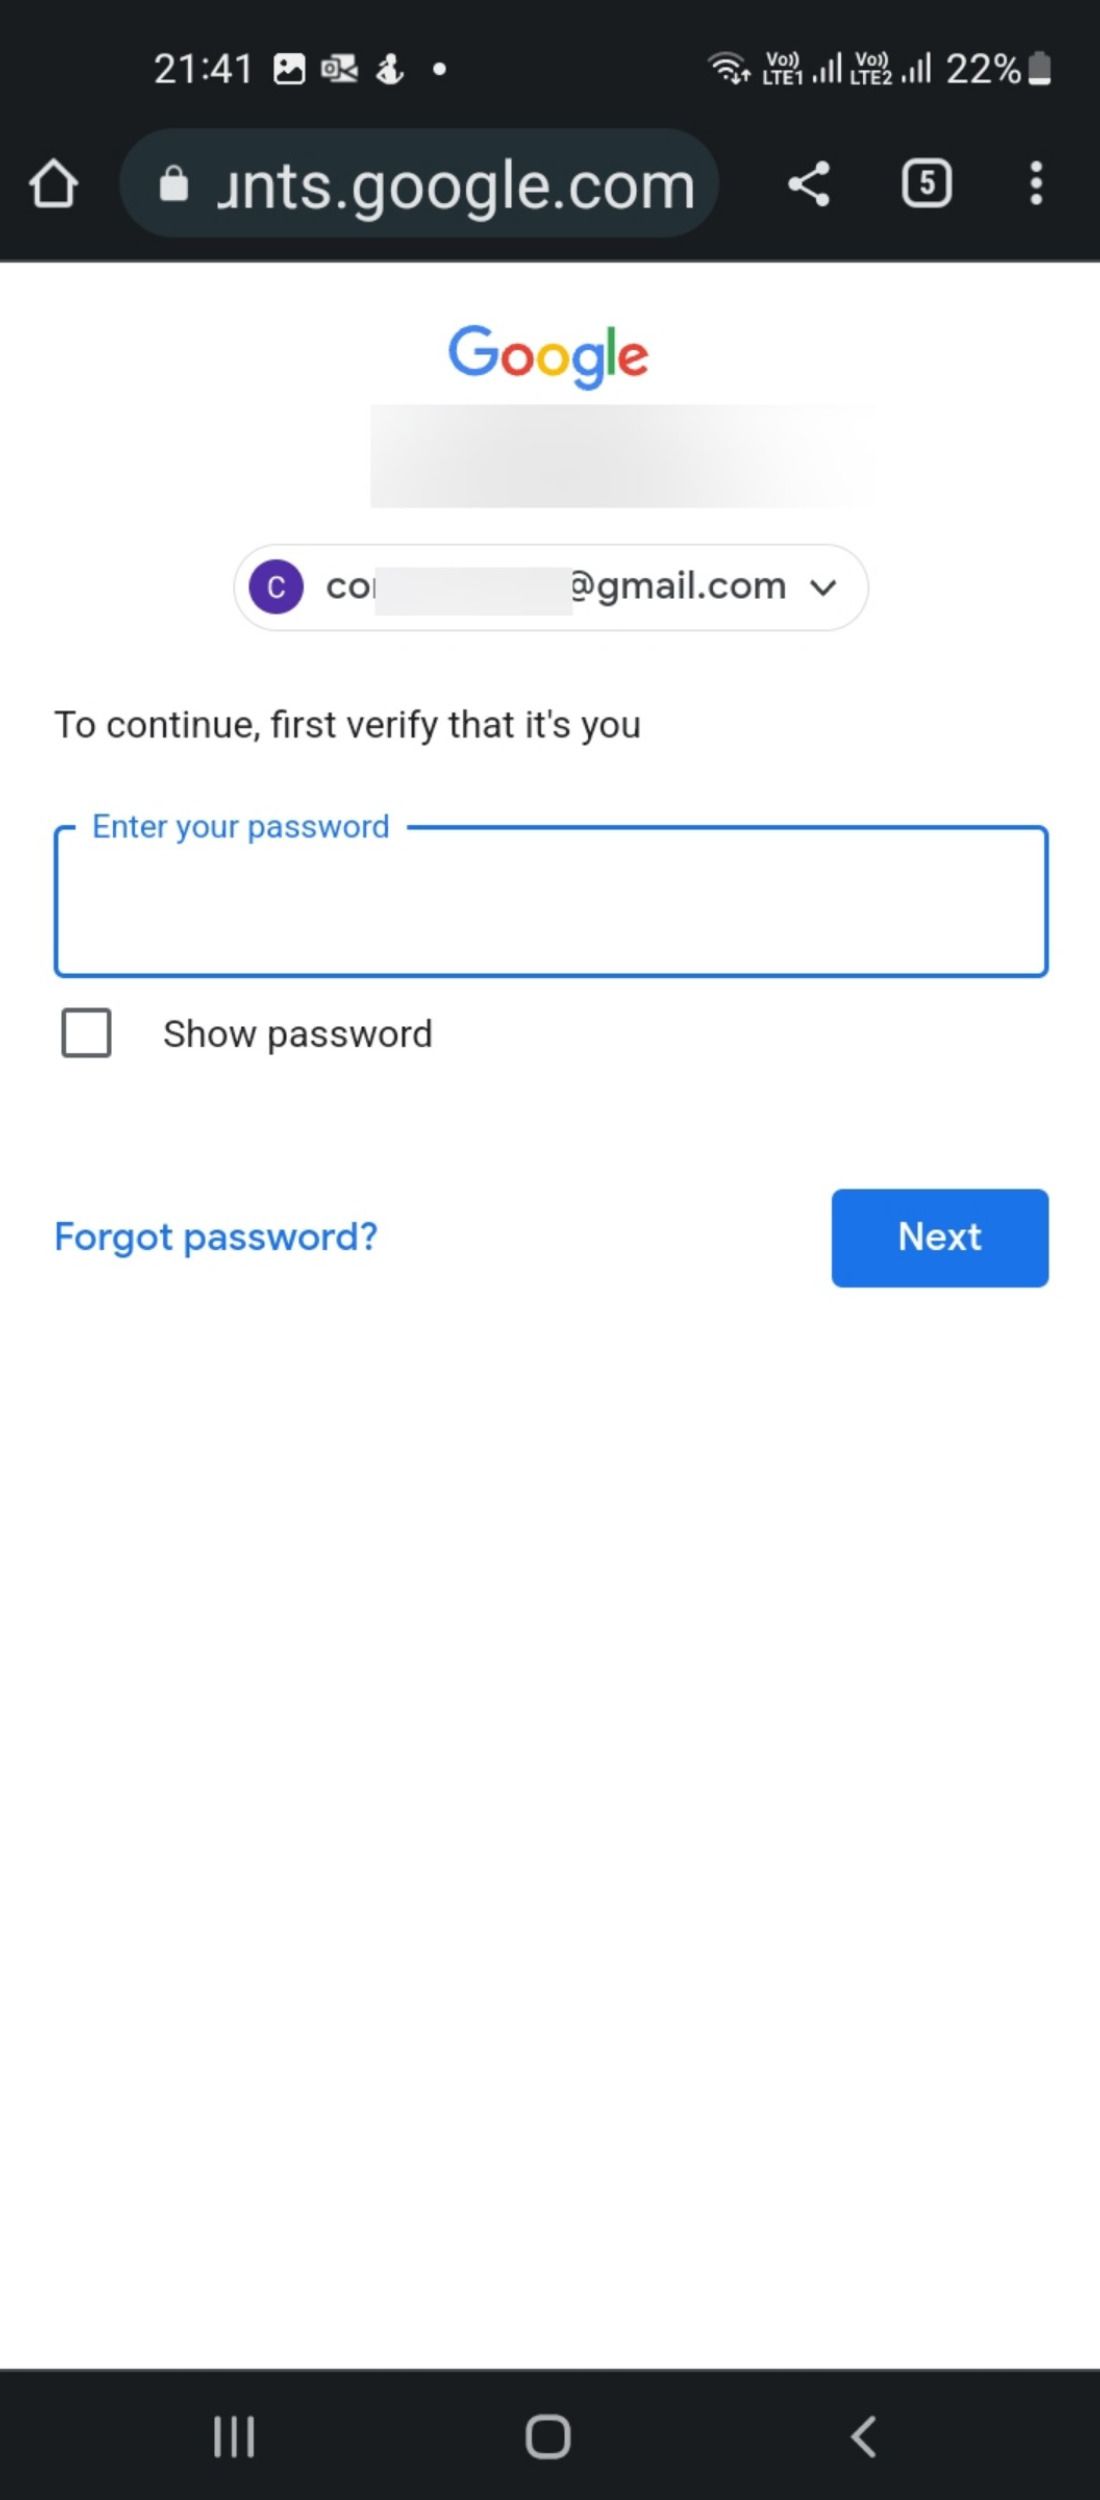 Verify login details in Google Password manager